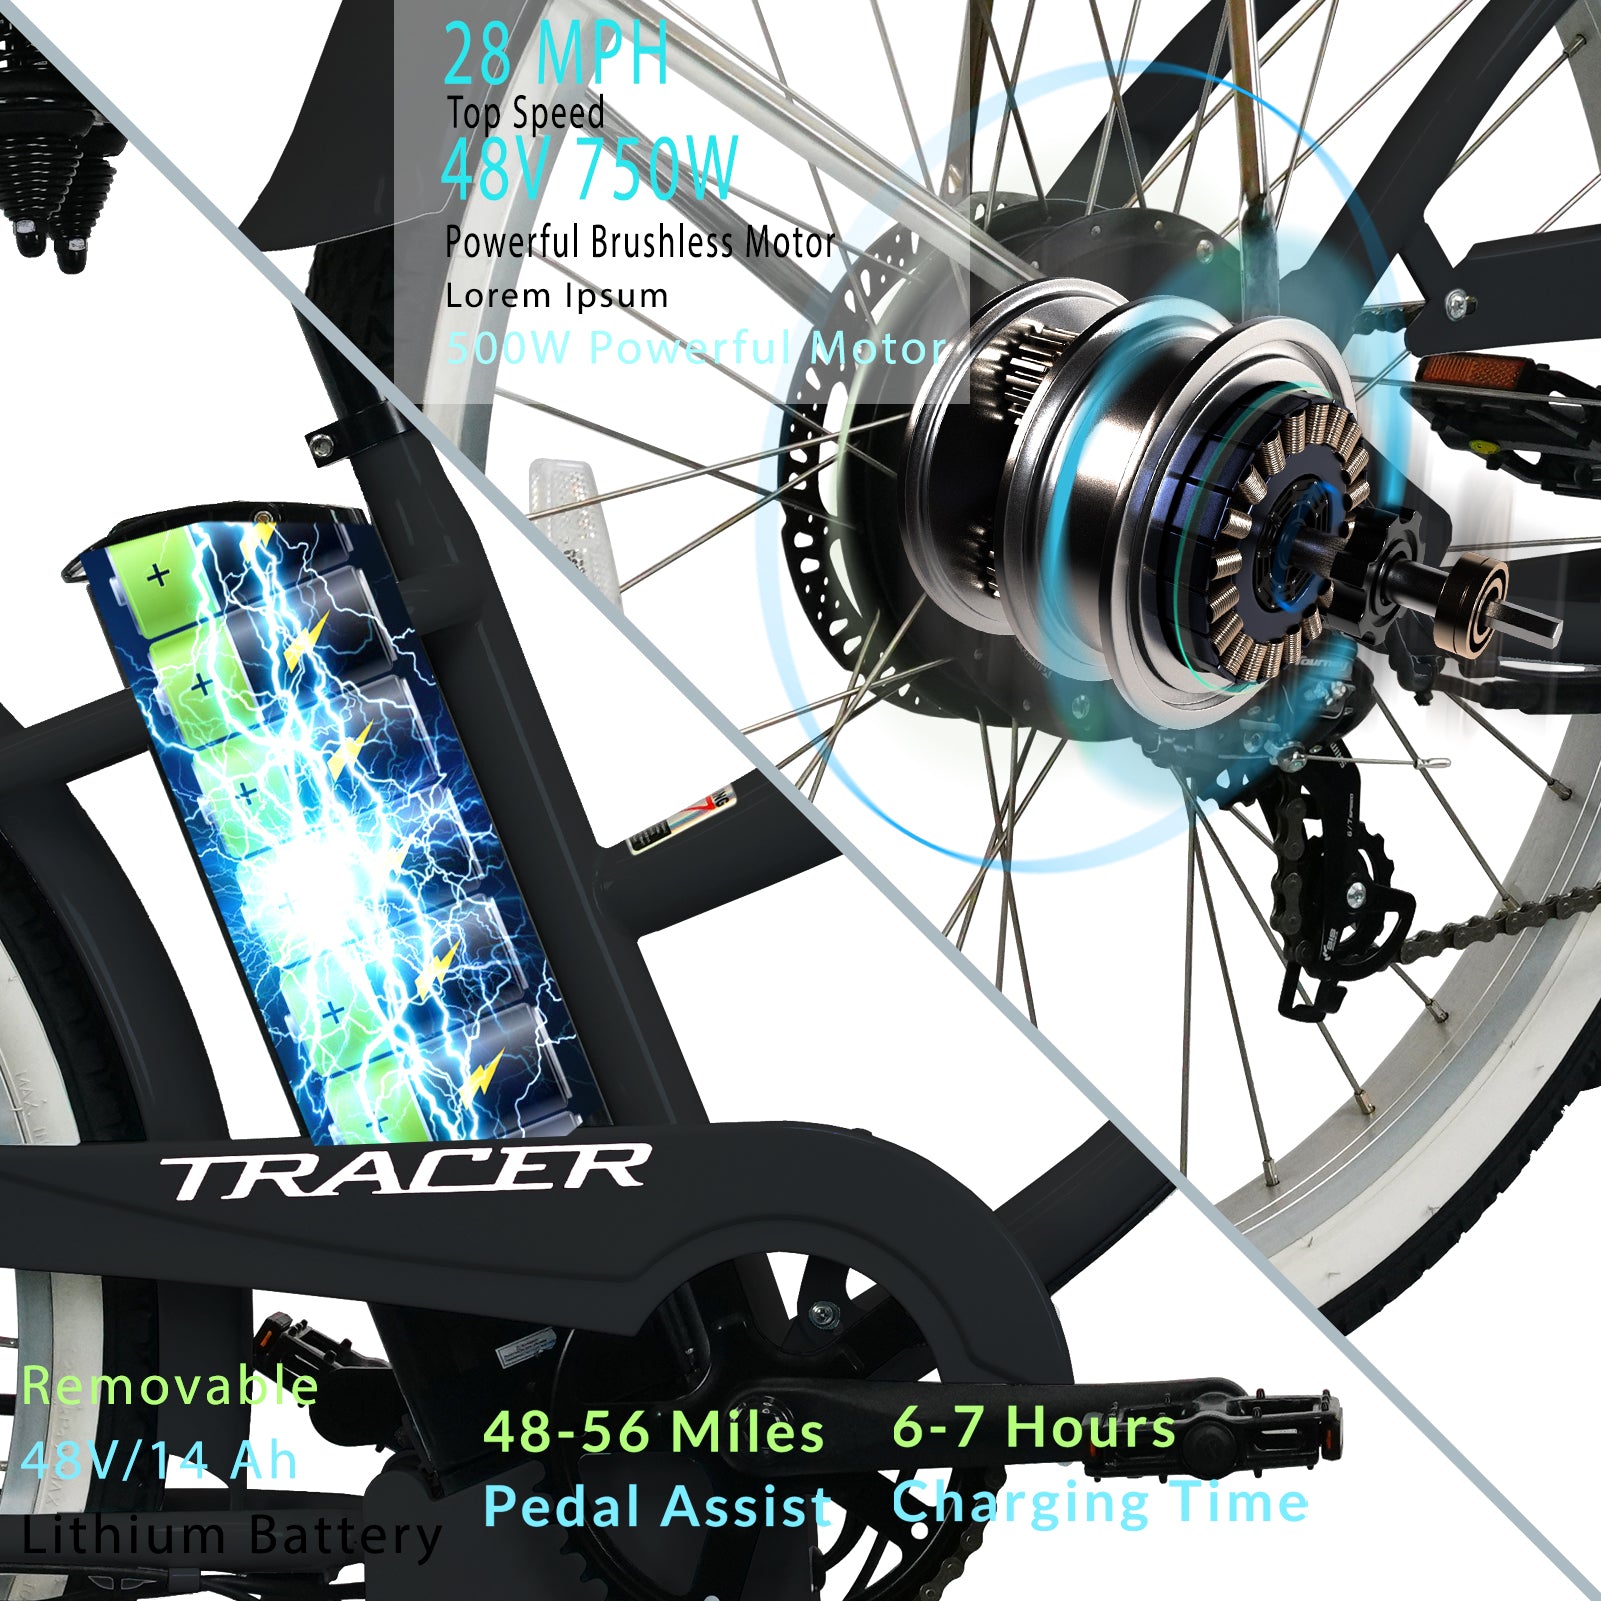 Tracer OMEGA 26" 7 Speed Electric Beach Cruiser Bike for WOMEN